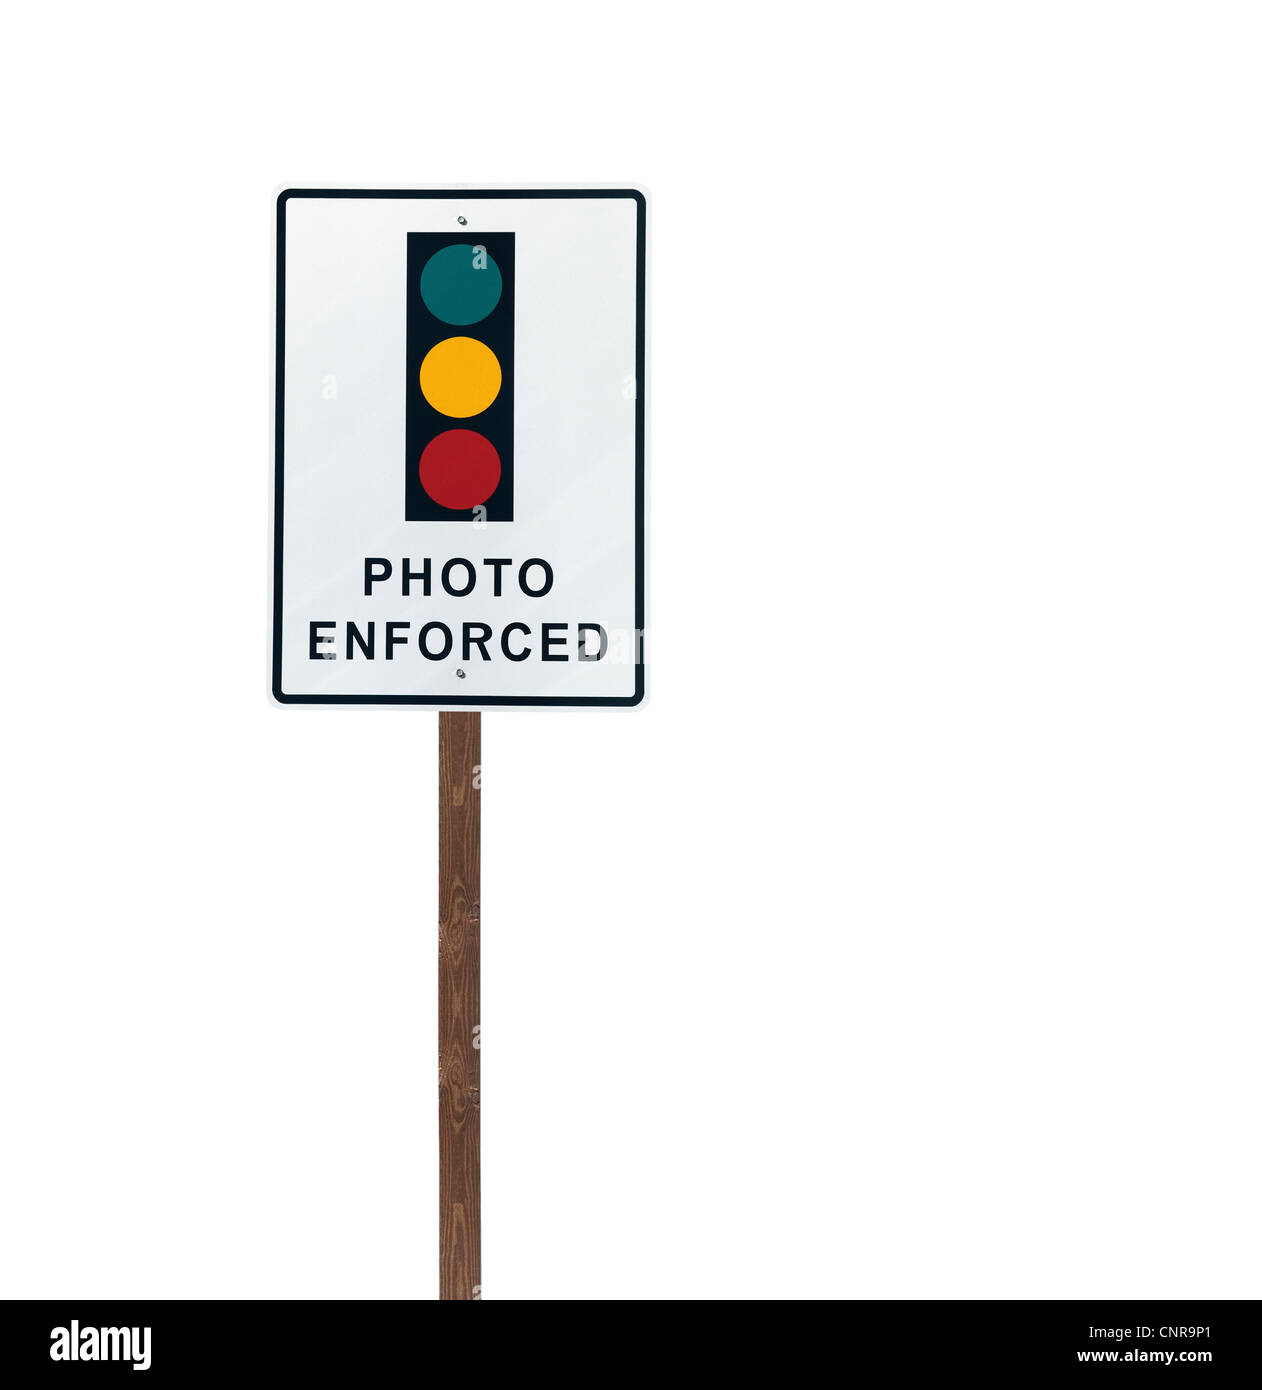 Ampel semaphore Safety control Abbildung Stockfotografie - Alamy